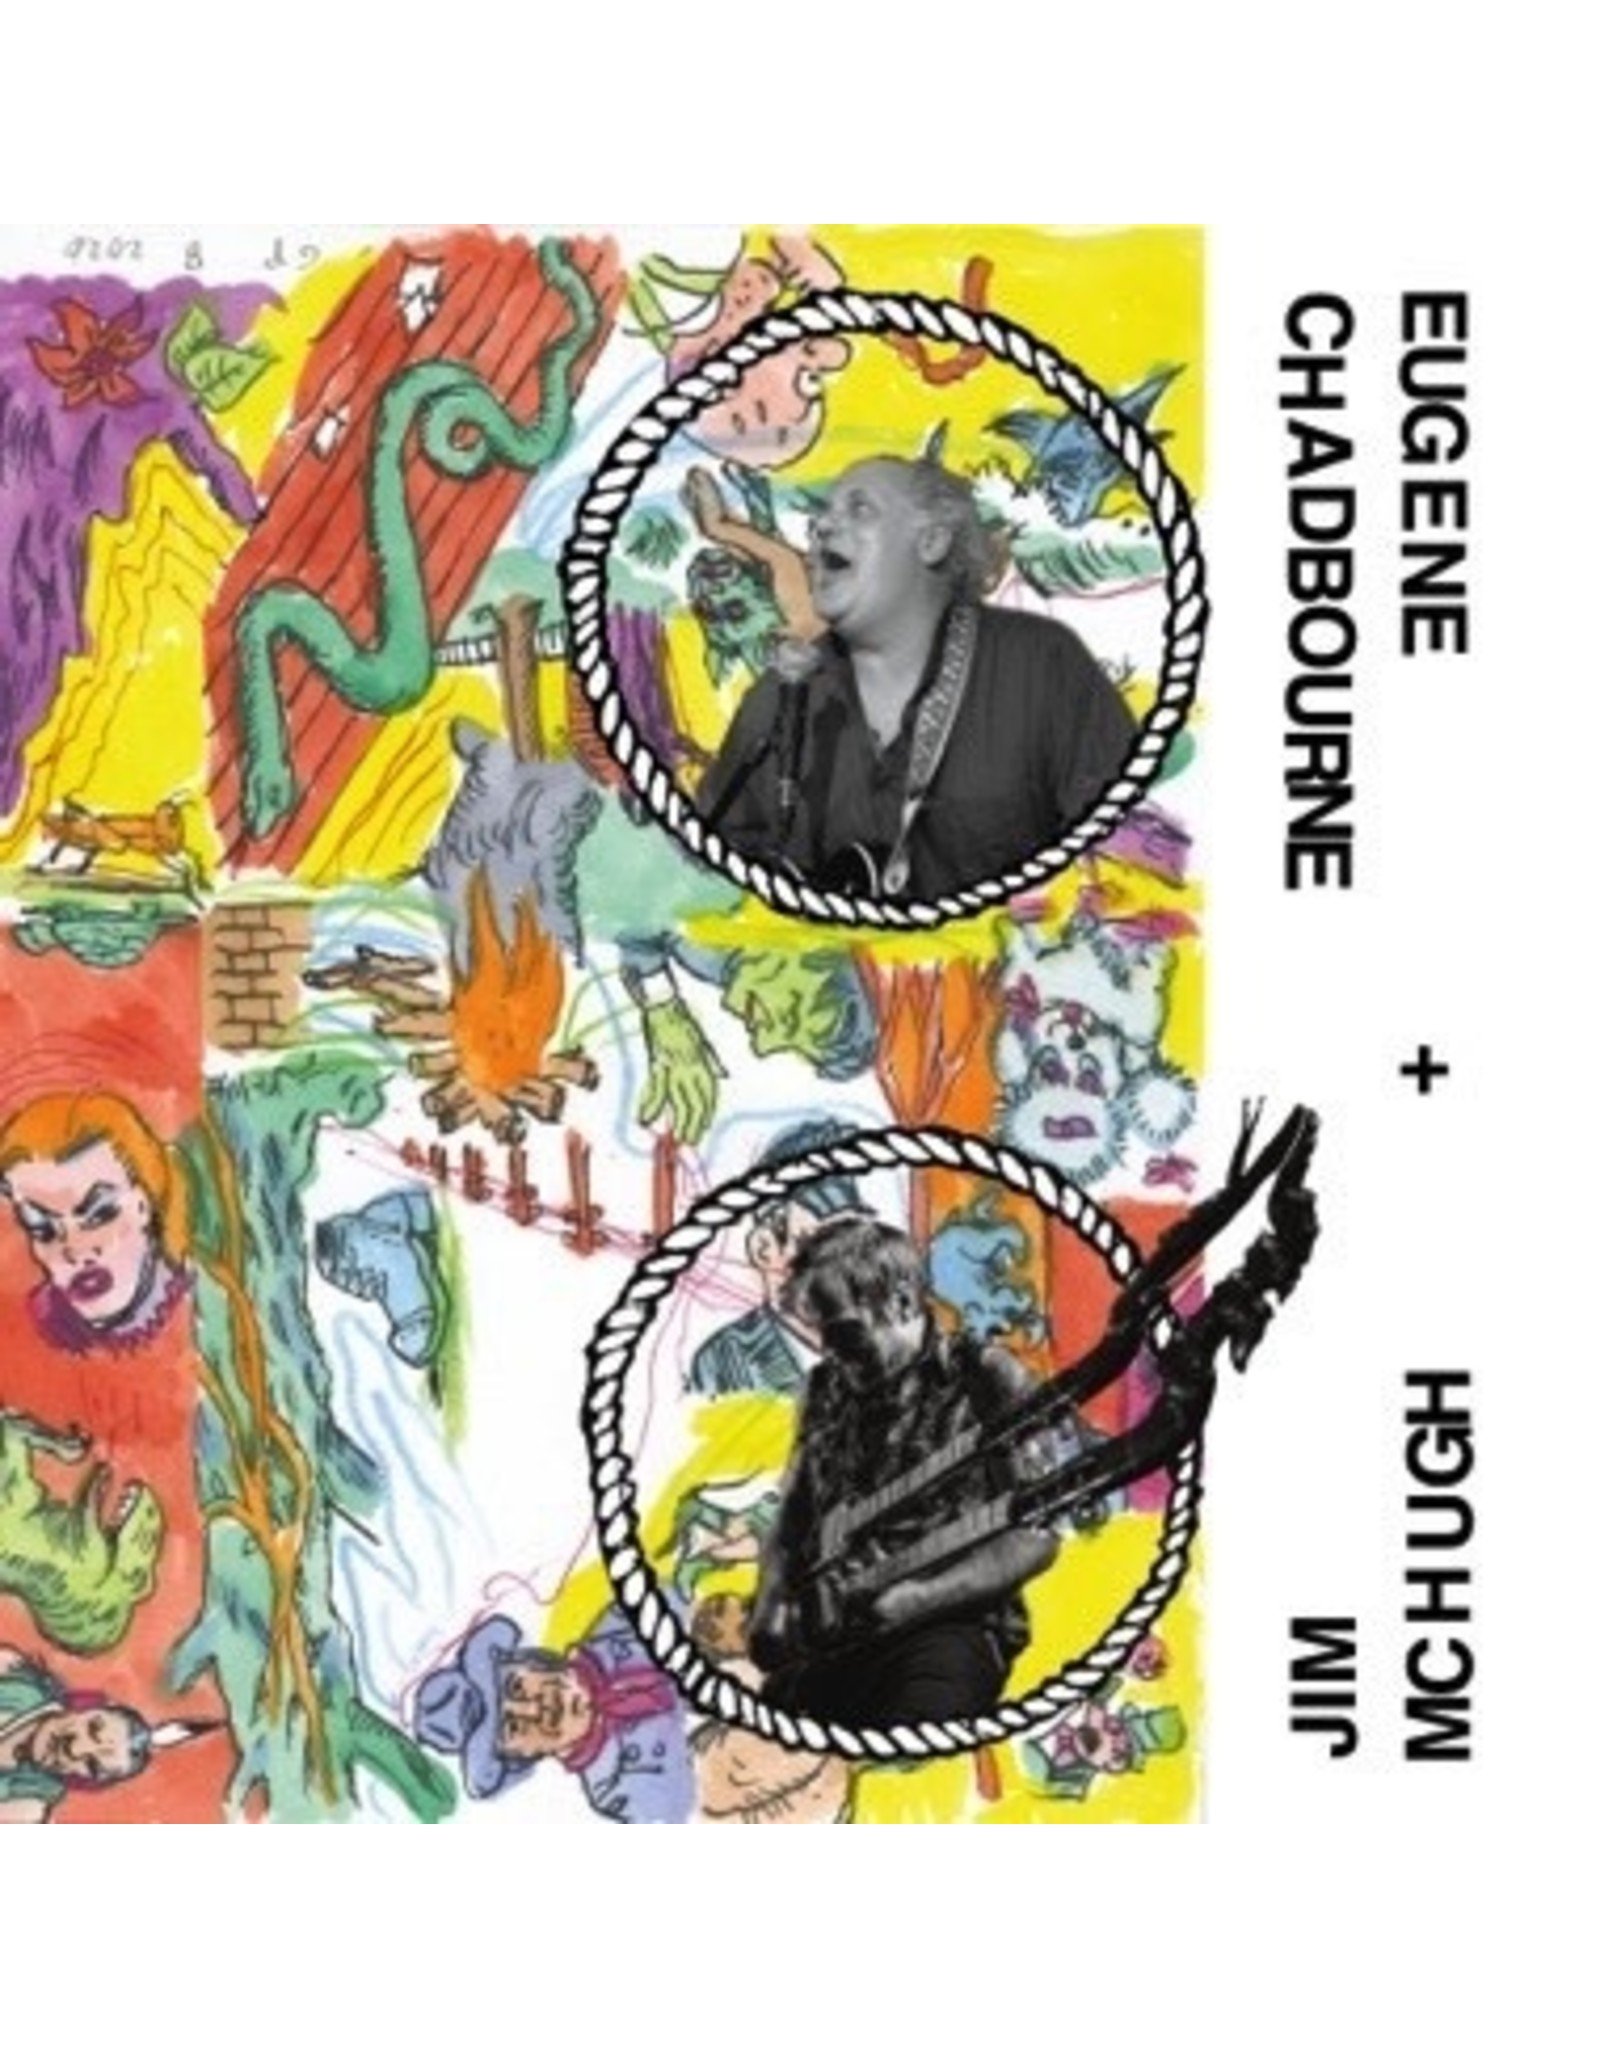 New Vinyl Eugene Chadbourne & Jim McHugh - Bad Scene LP